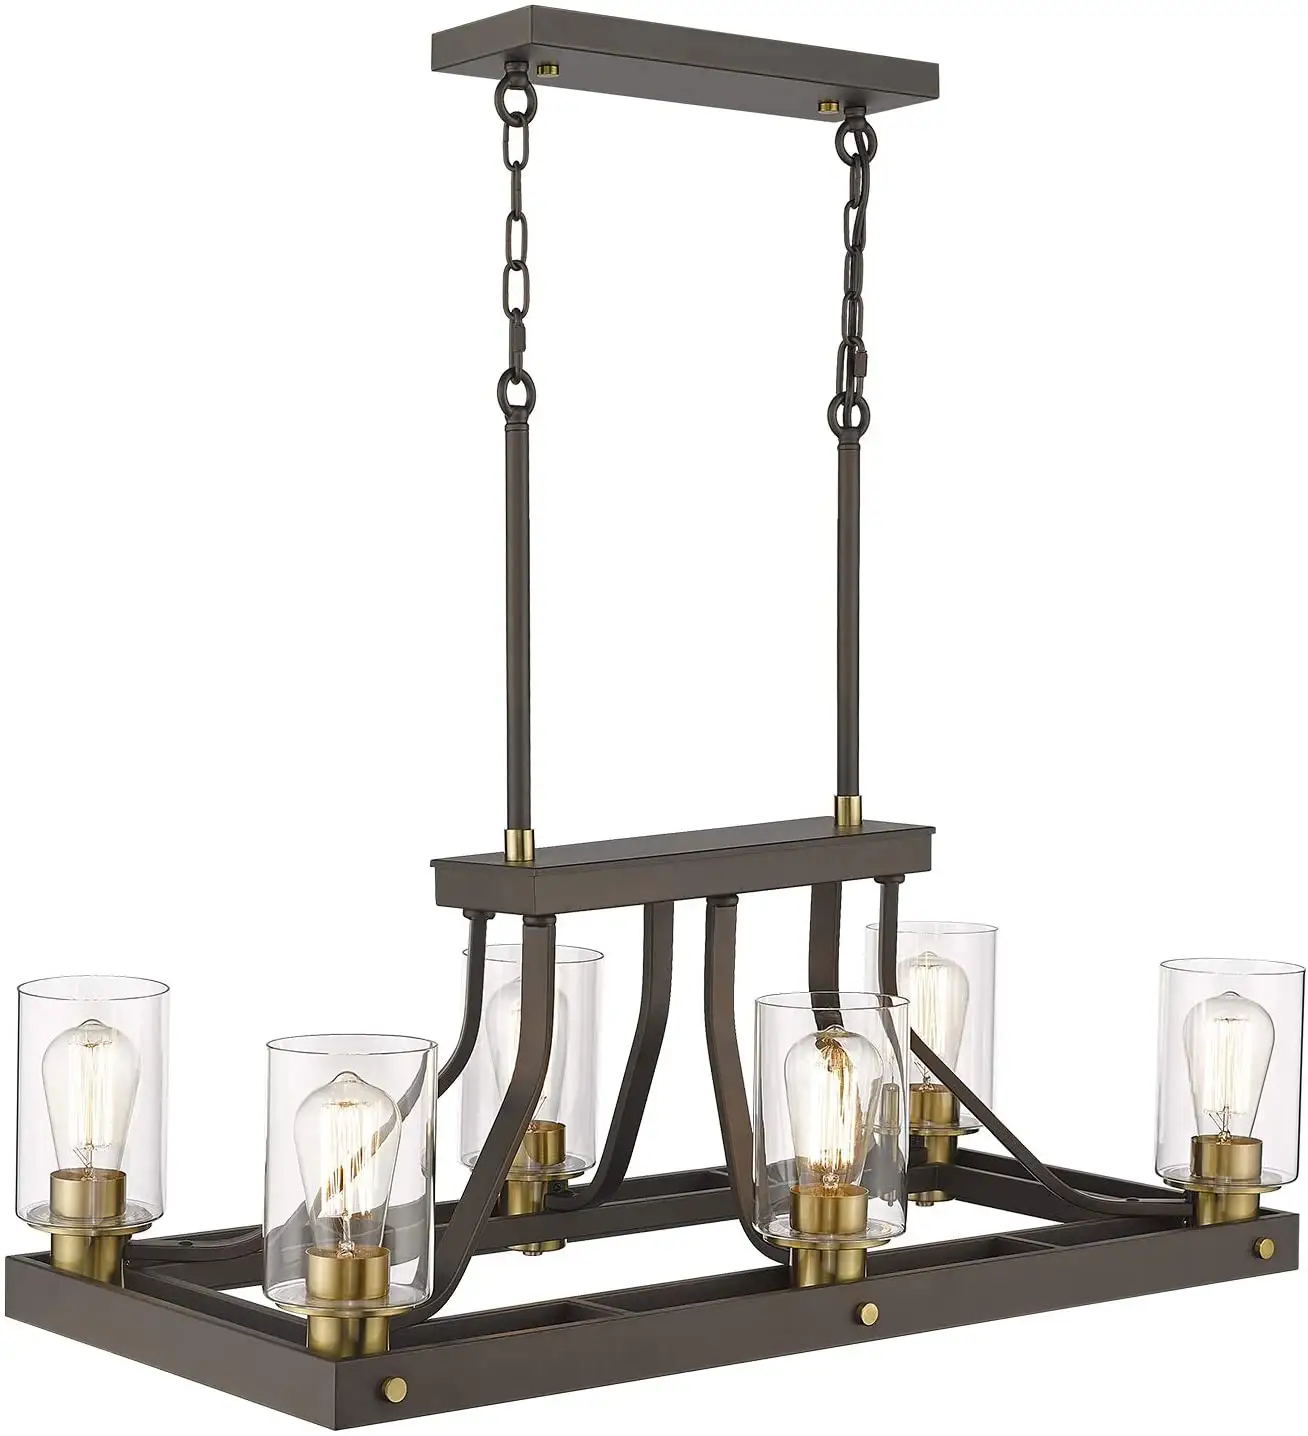 ETL listed rustic luxury large black glass kitchen modern hanging pendant light chandelier